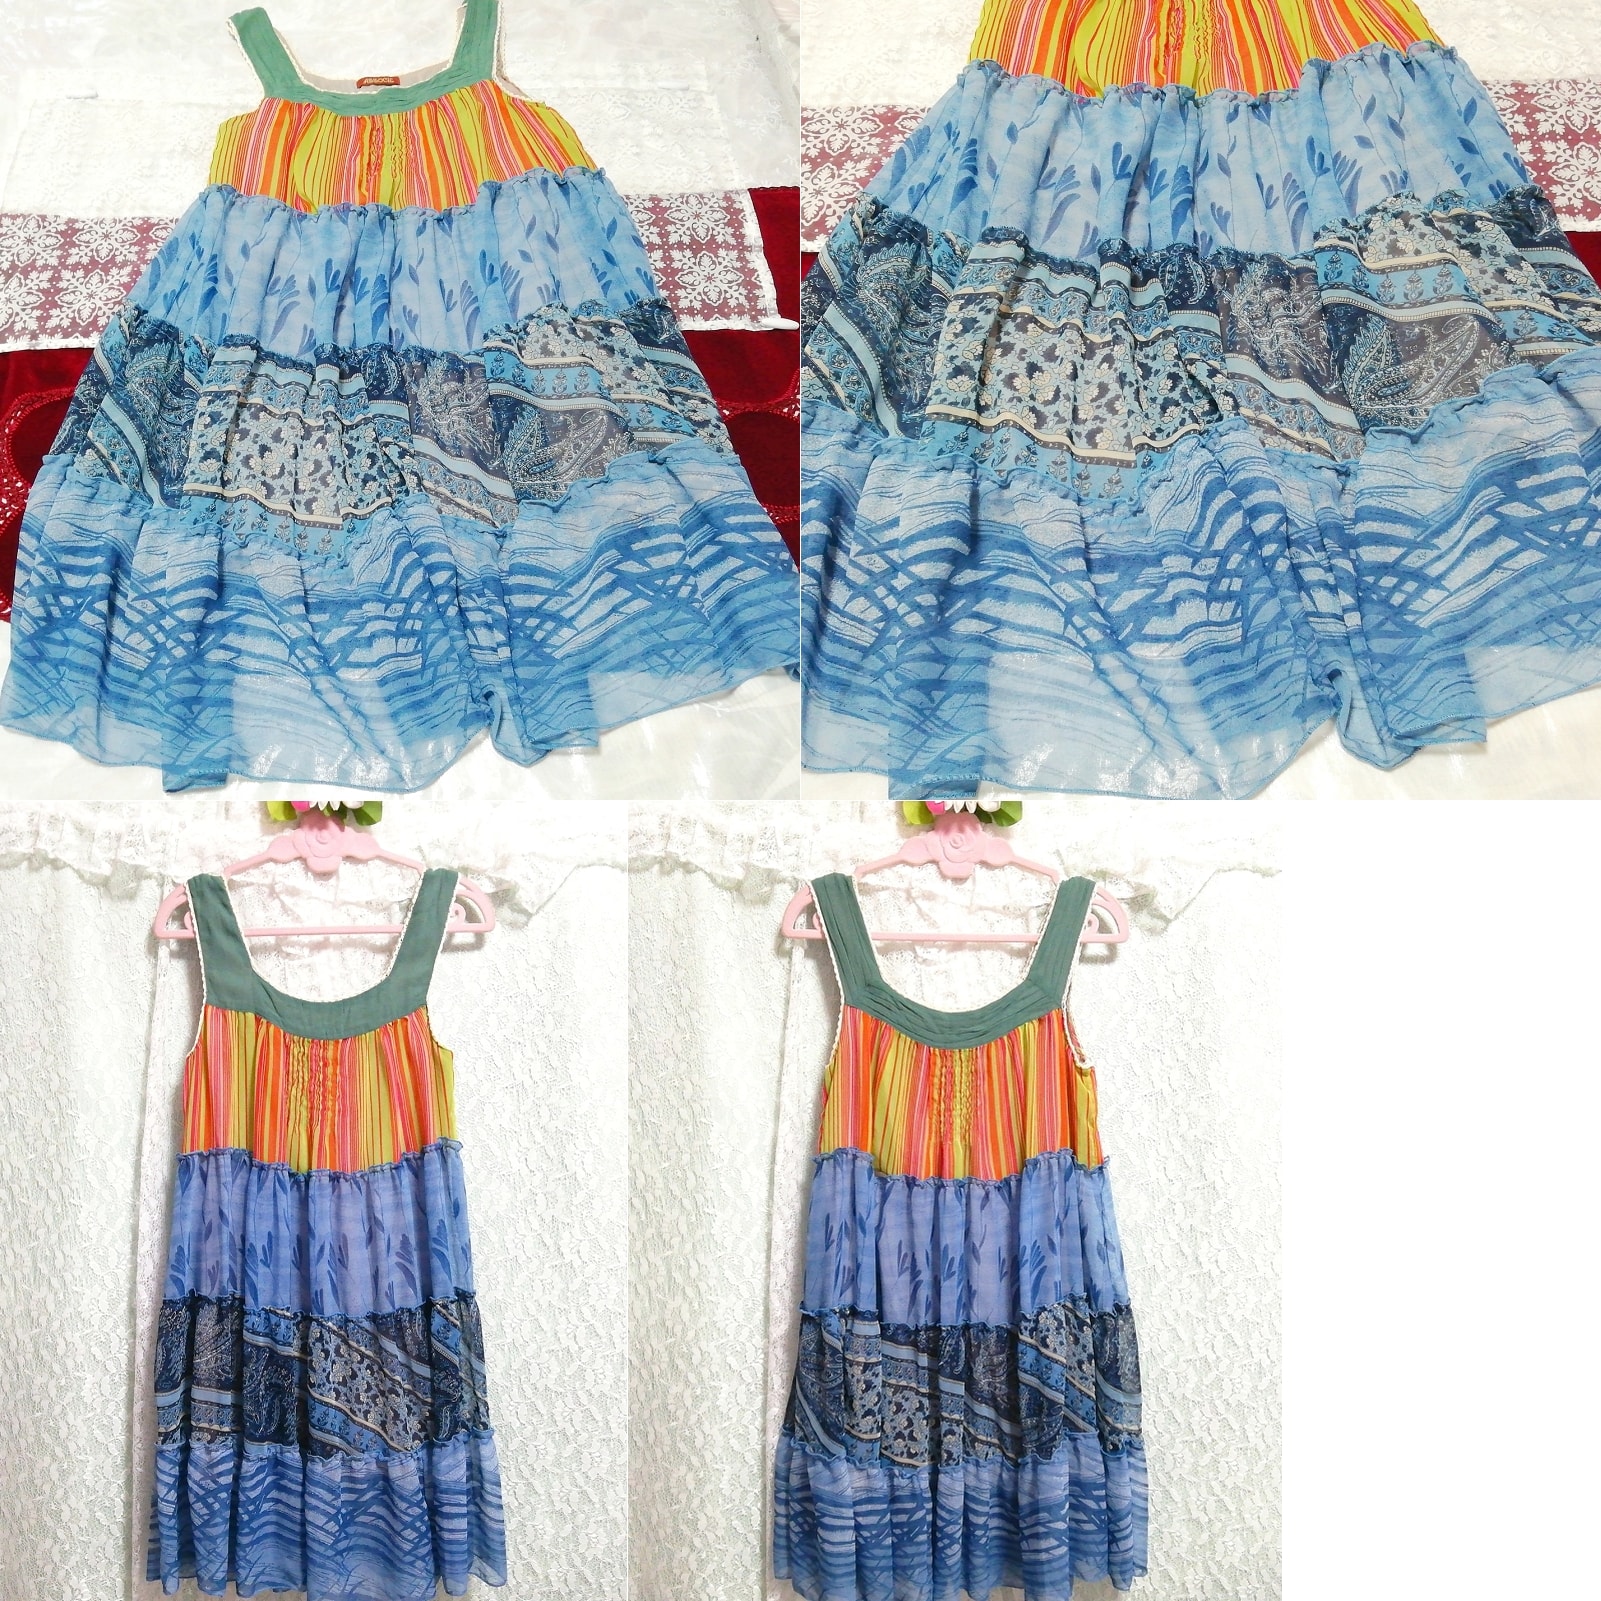 Green orange blue ethnic chiffon sleeveless negligee nightgown dress, knee length skirt, m size